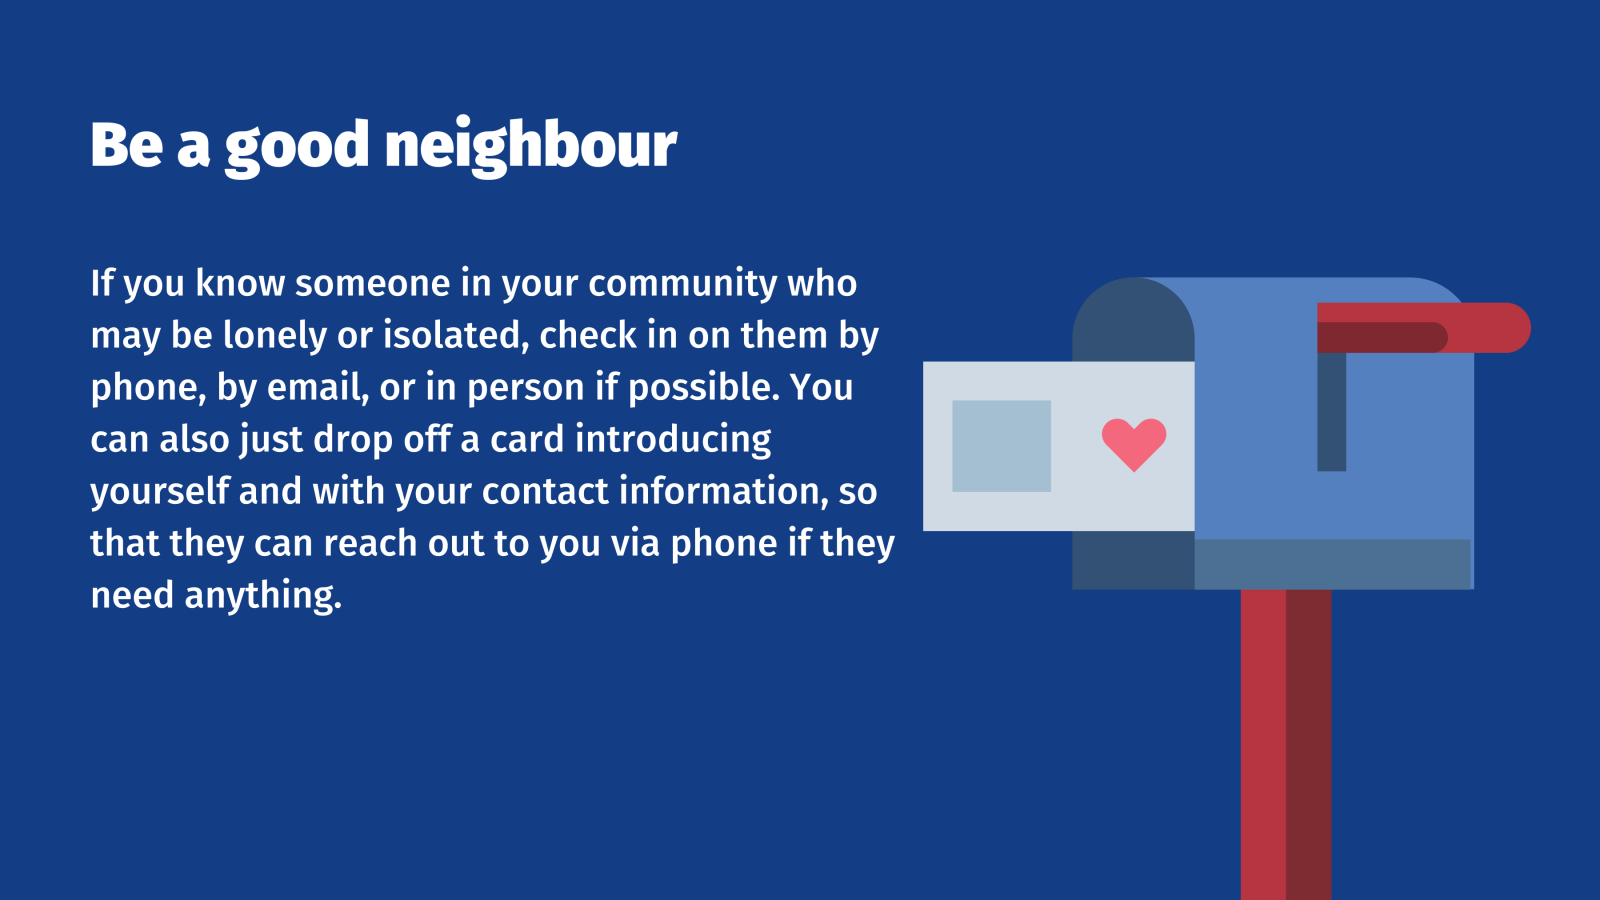 Be a good neighbour poster